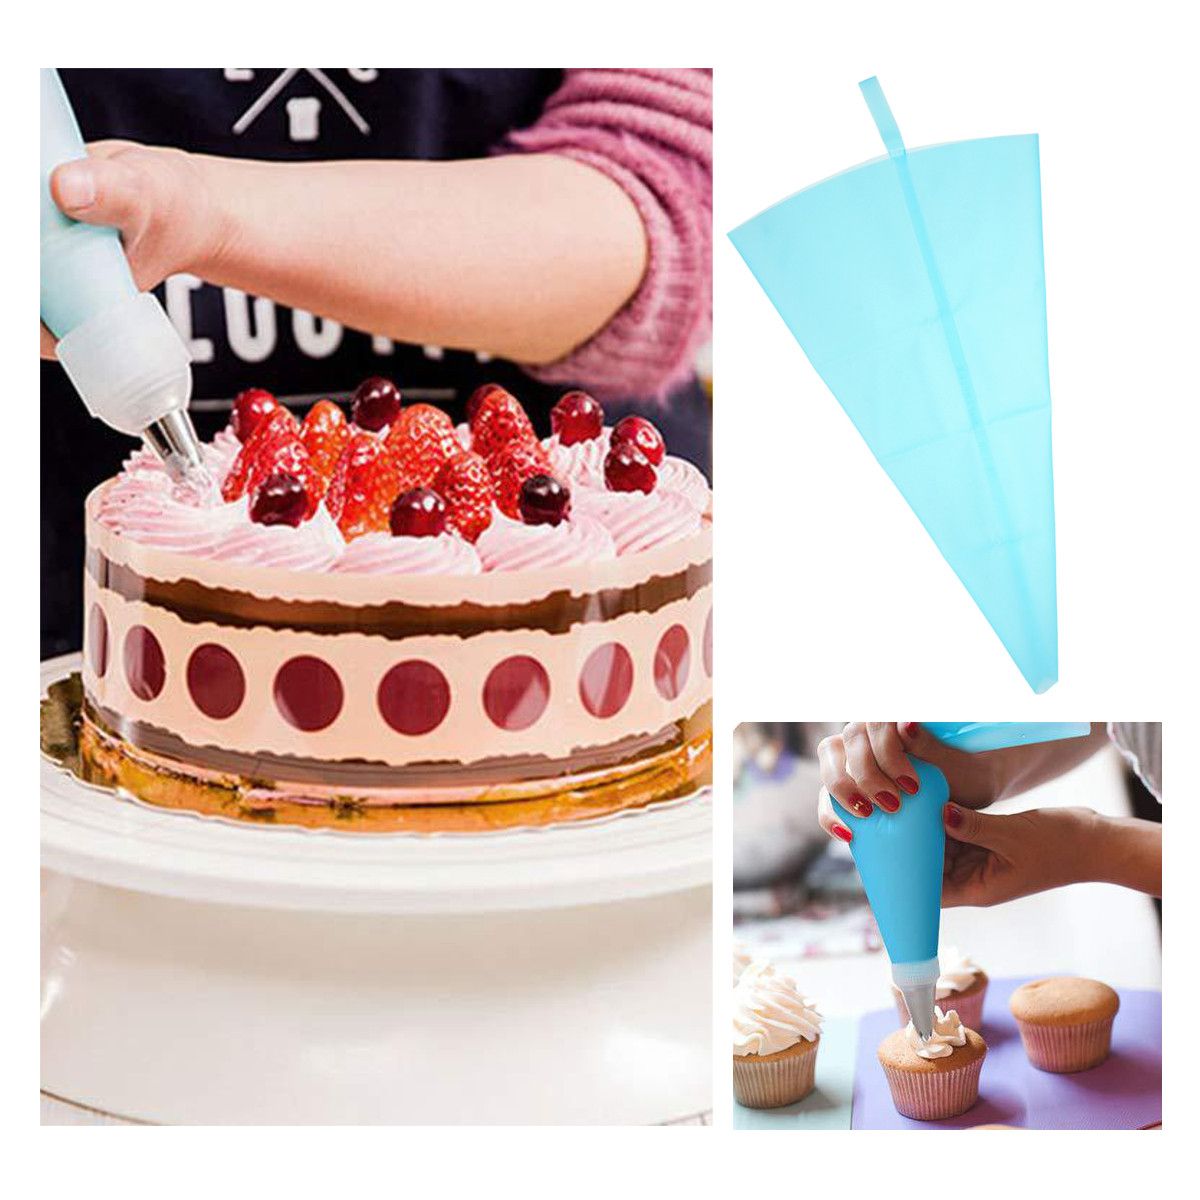 117pcs-Cake-Decorations-Kit-Supplies-Cake-Turntable-Spatula-Bag-Pastry-Nozzle-Tool-Set-1595170